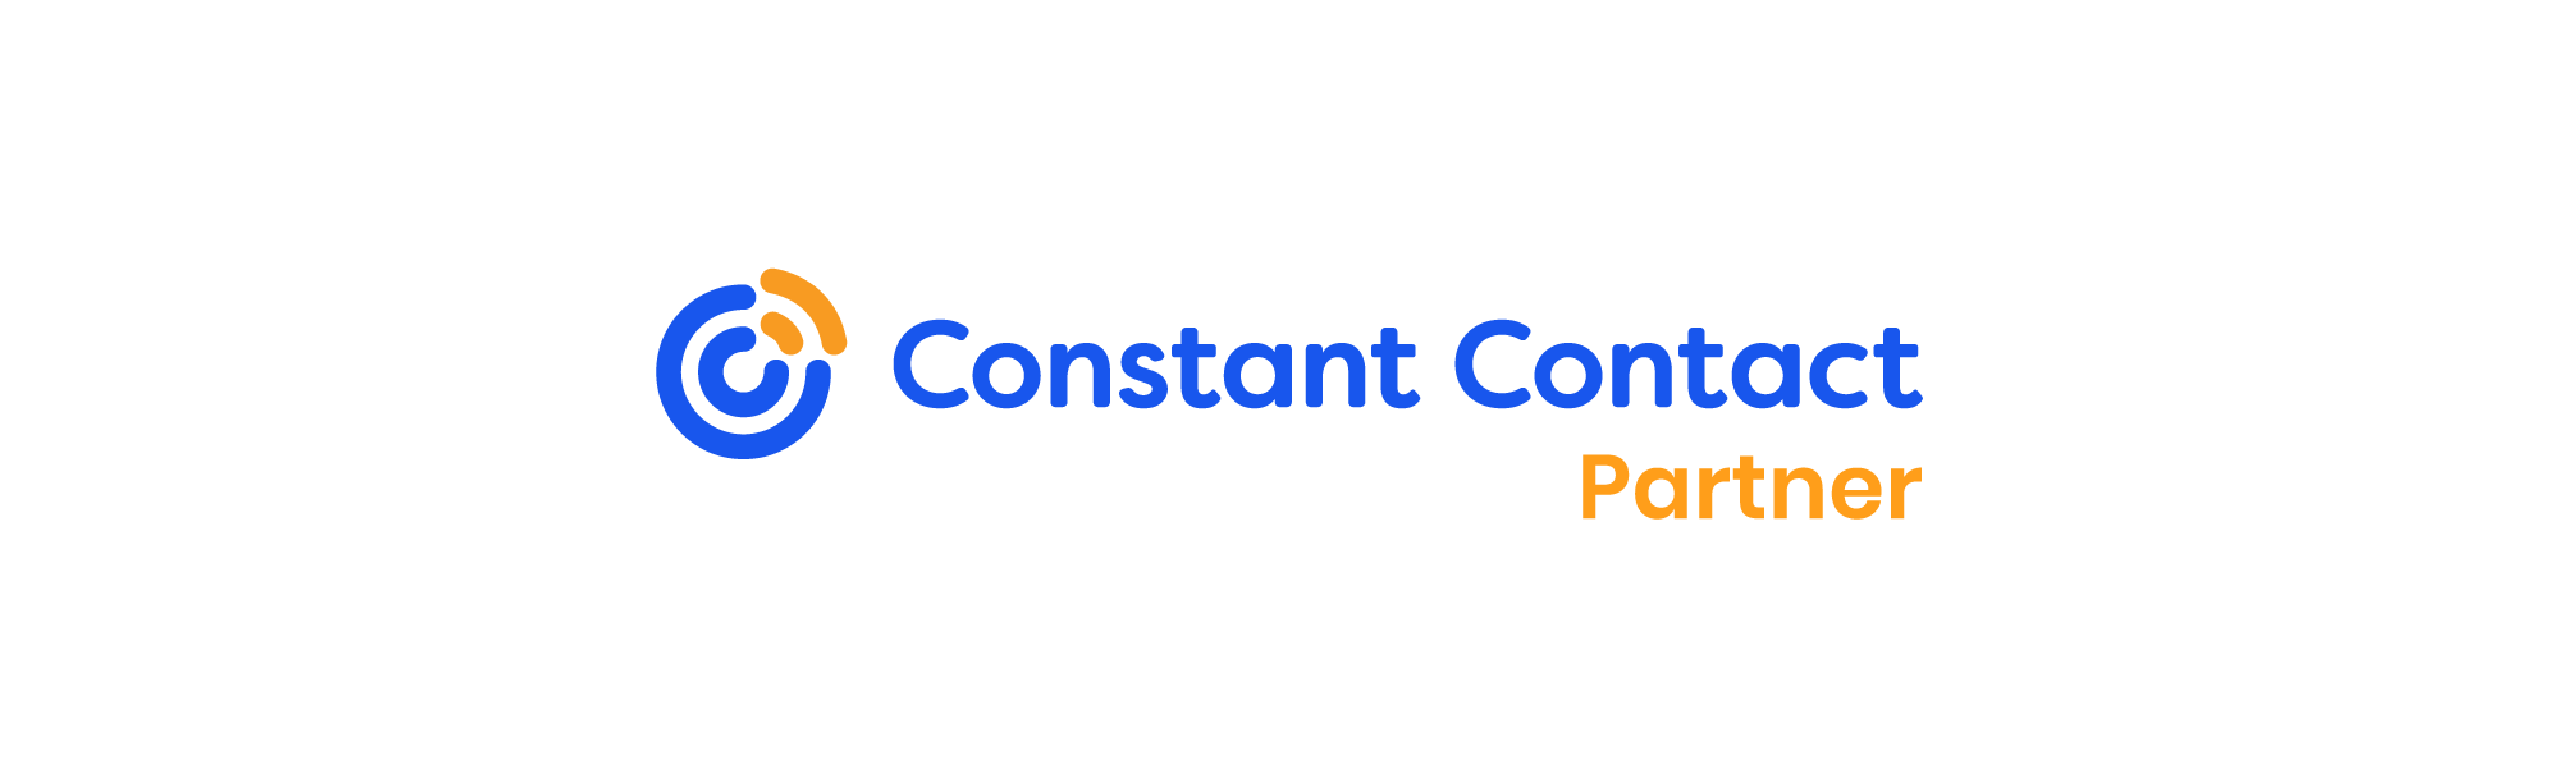 constant-contact-partner_logo_horizontal_blue_orange_1000px-wide.png